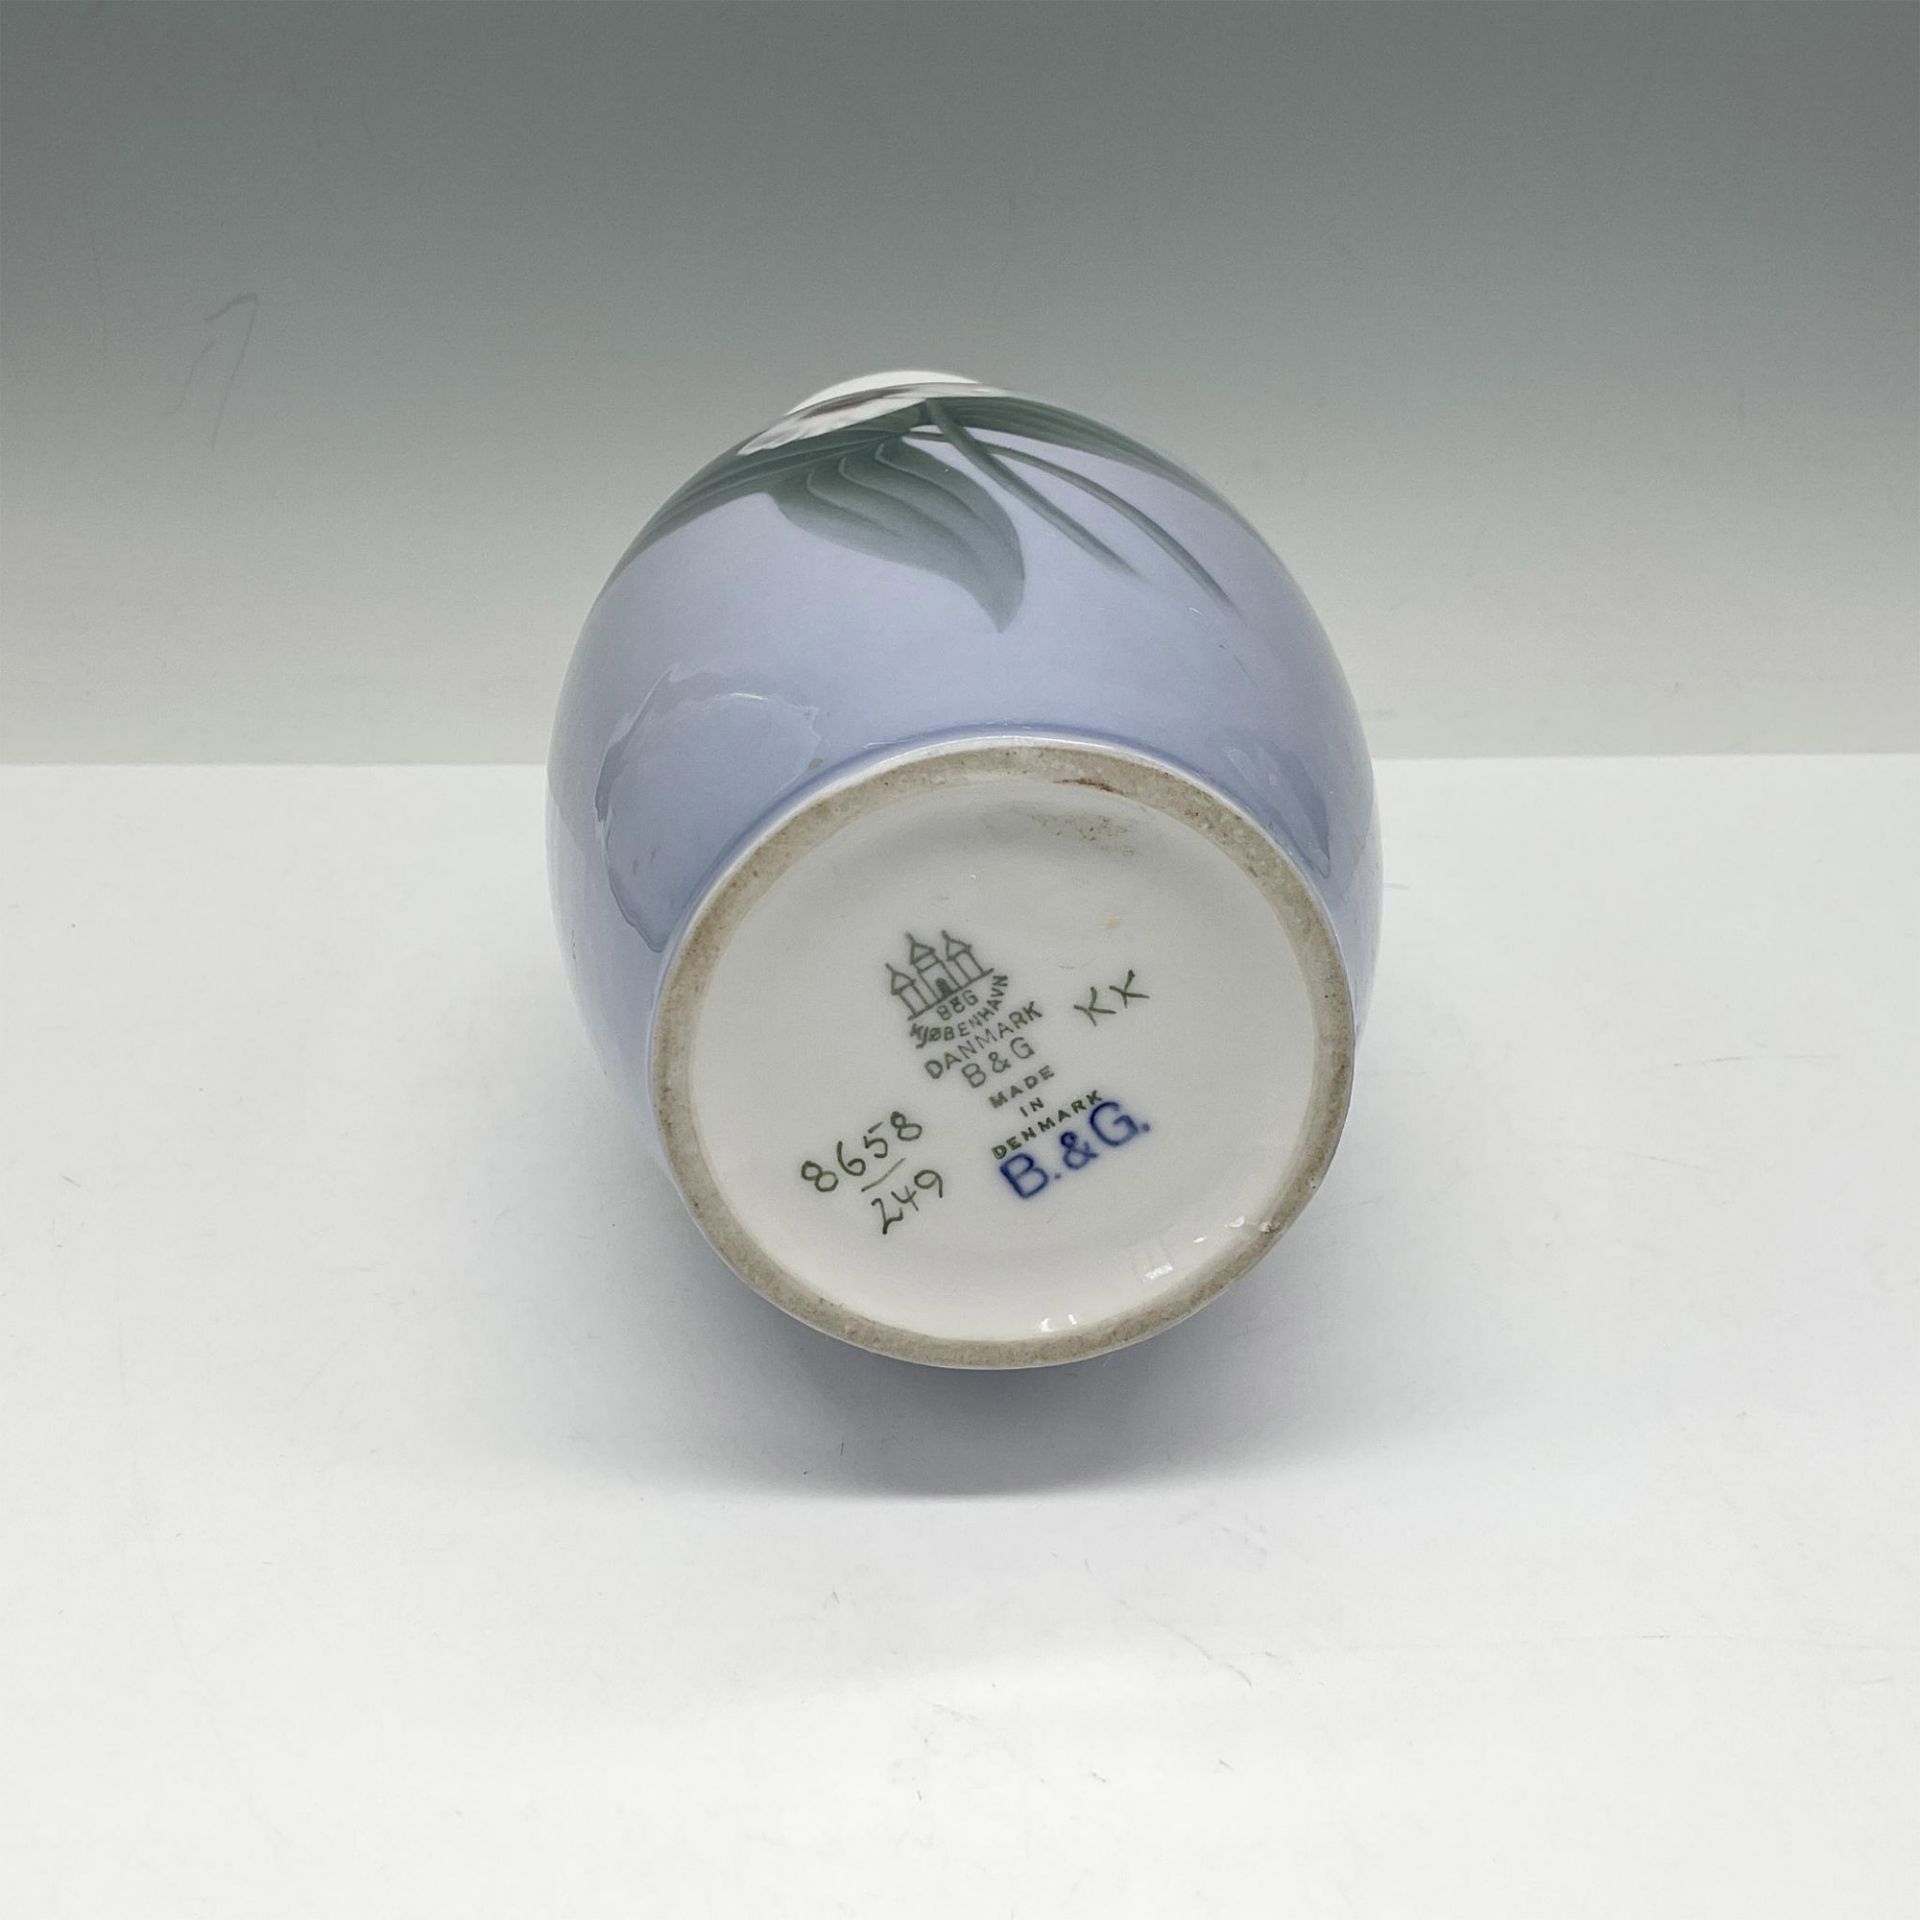 Bing & Grondahl Porcelain Vase - Bild 3 aus 3